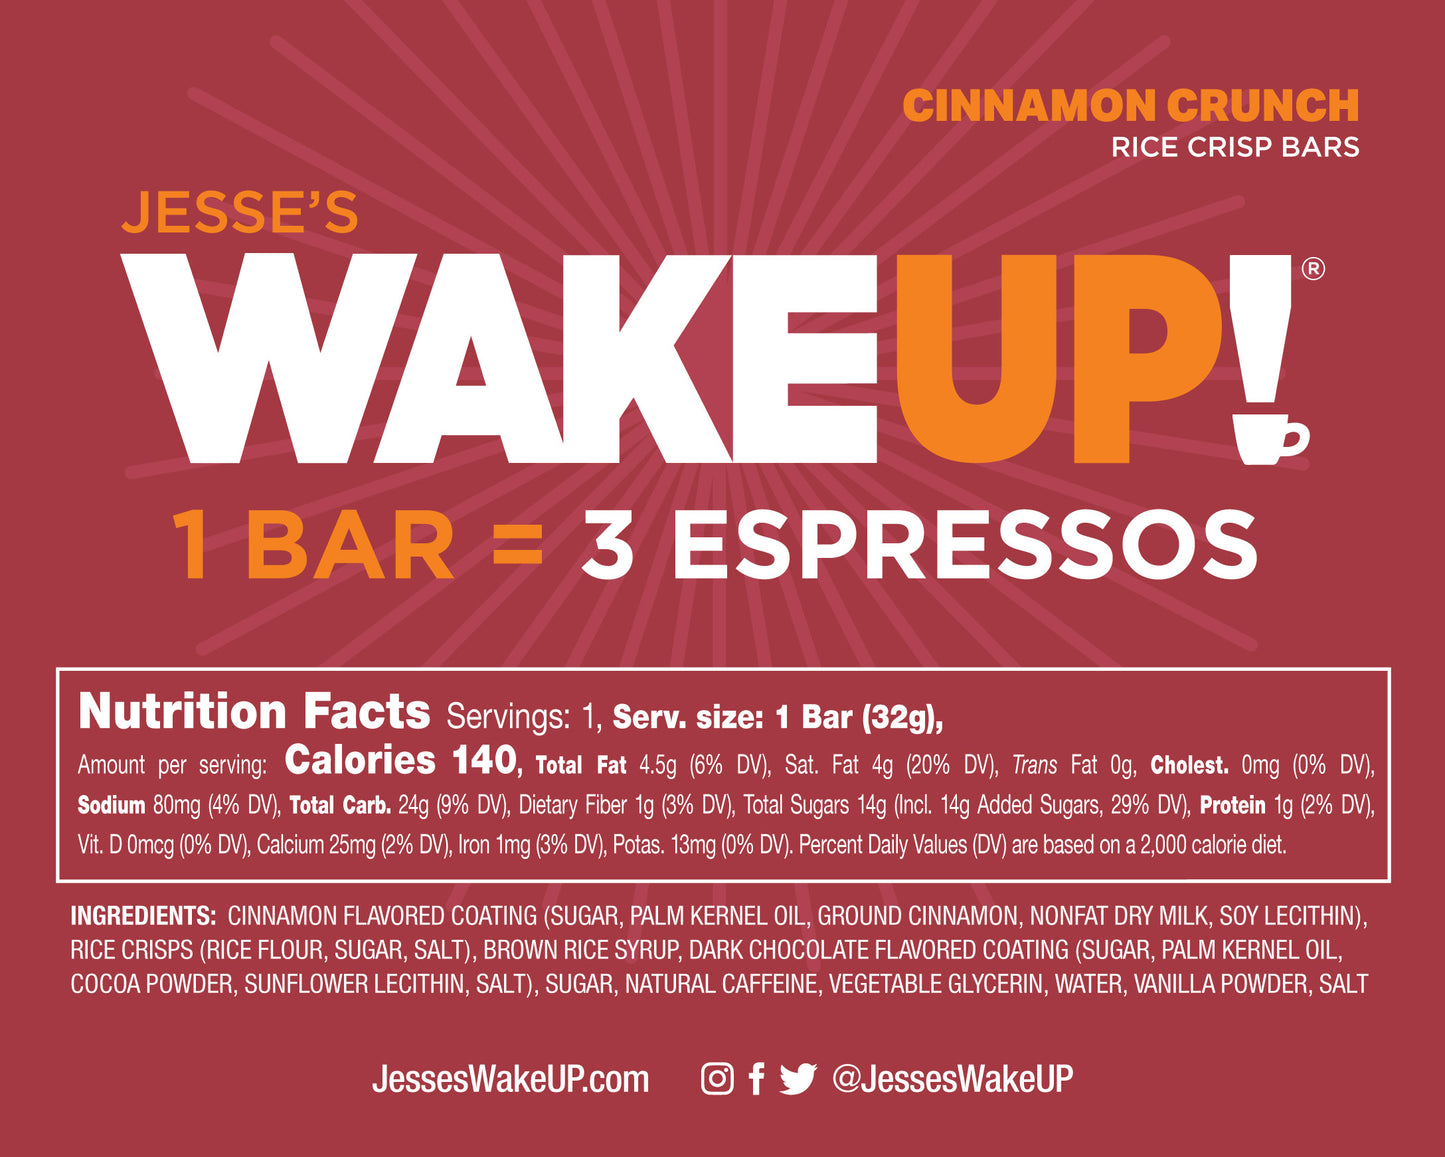 Jesse's WakeUP! 1 Bar = 3 Espressos (Cinnamon Crunch)